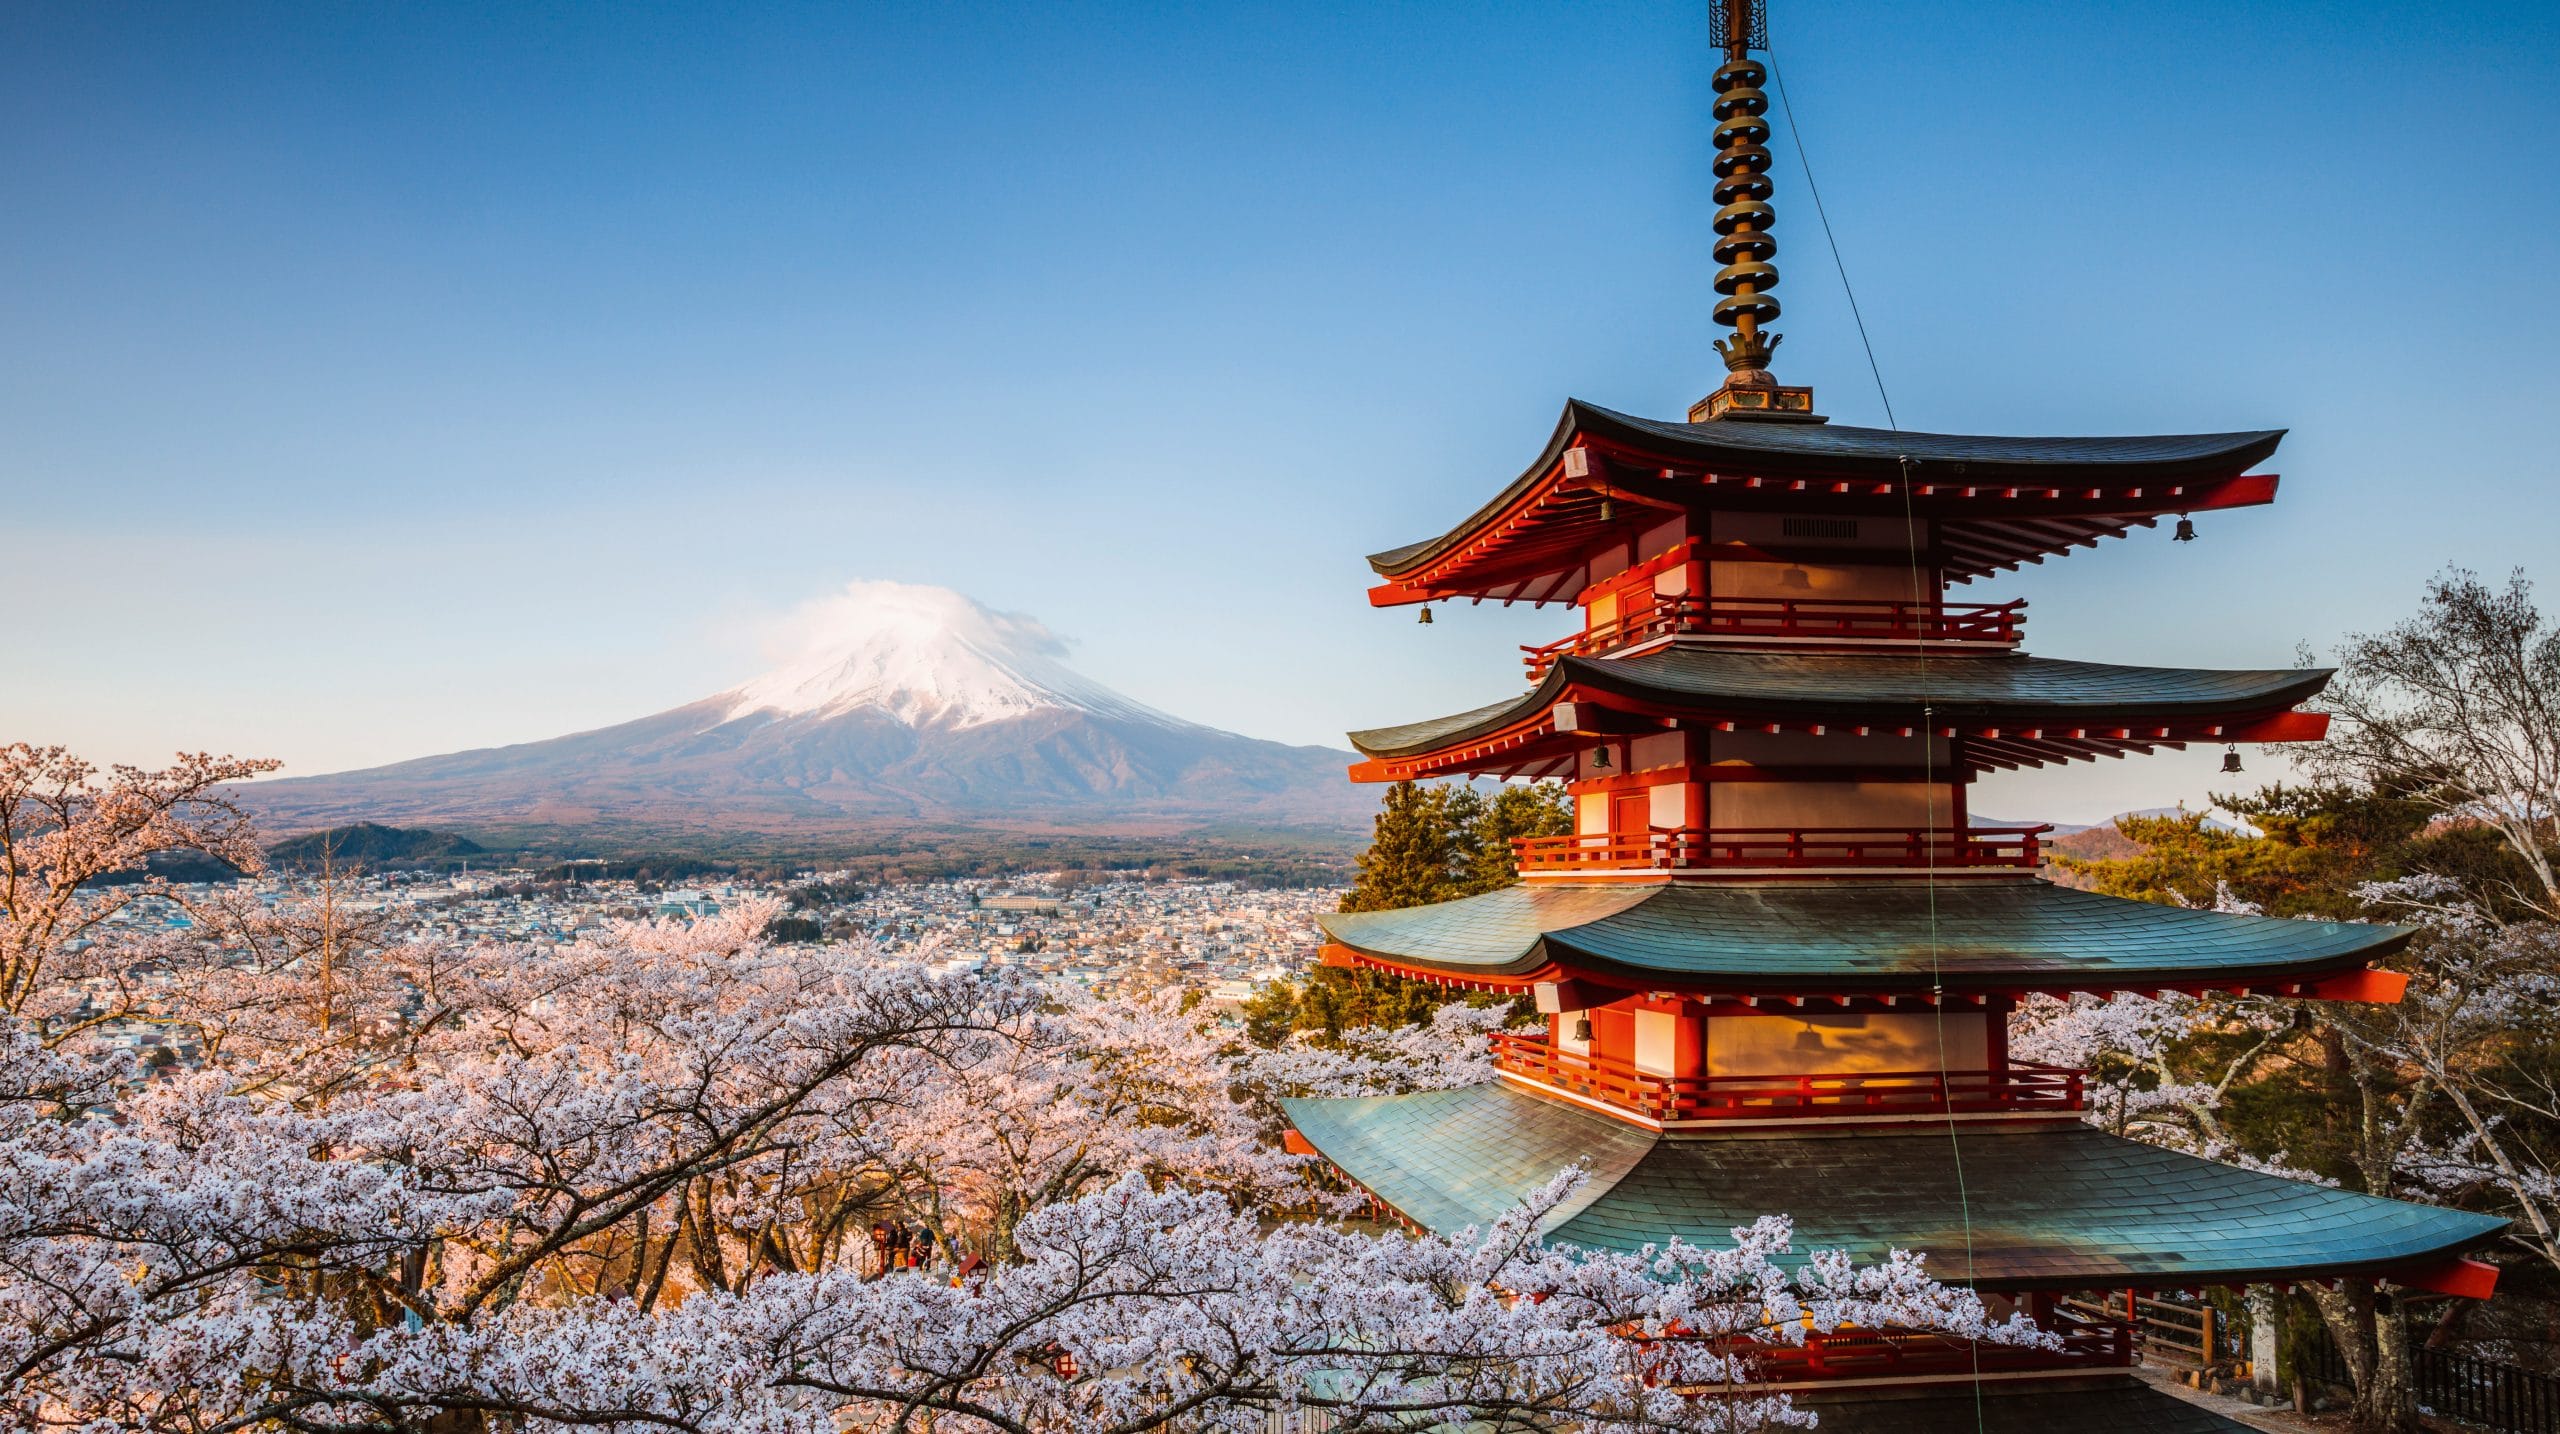 Japan. Image: AWL Images